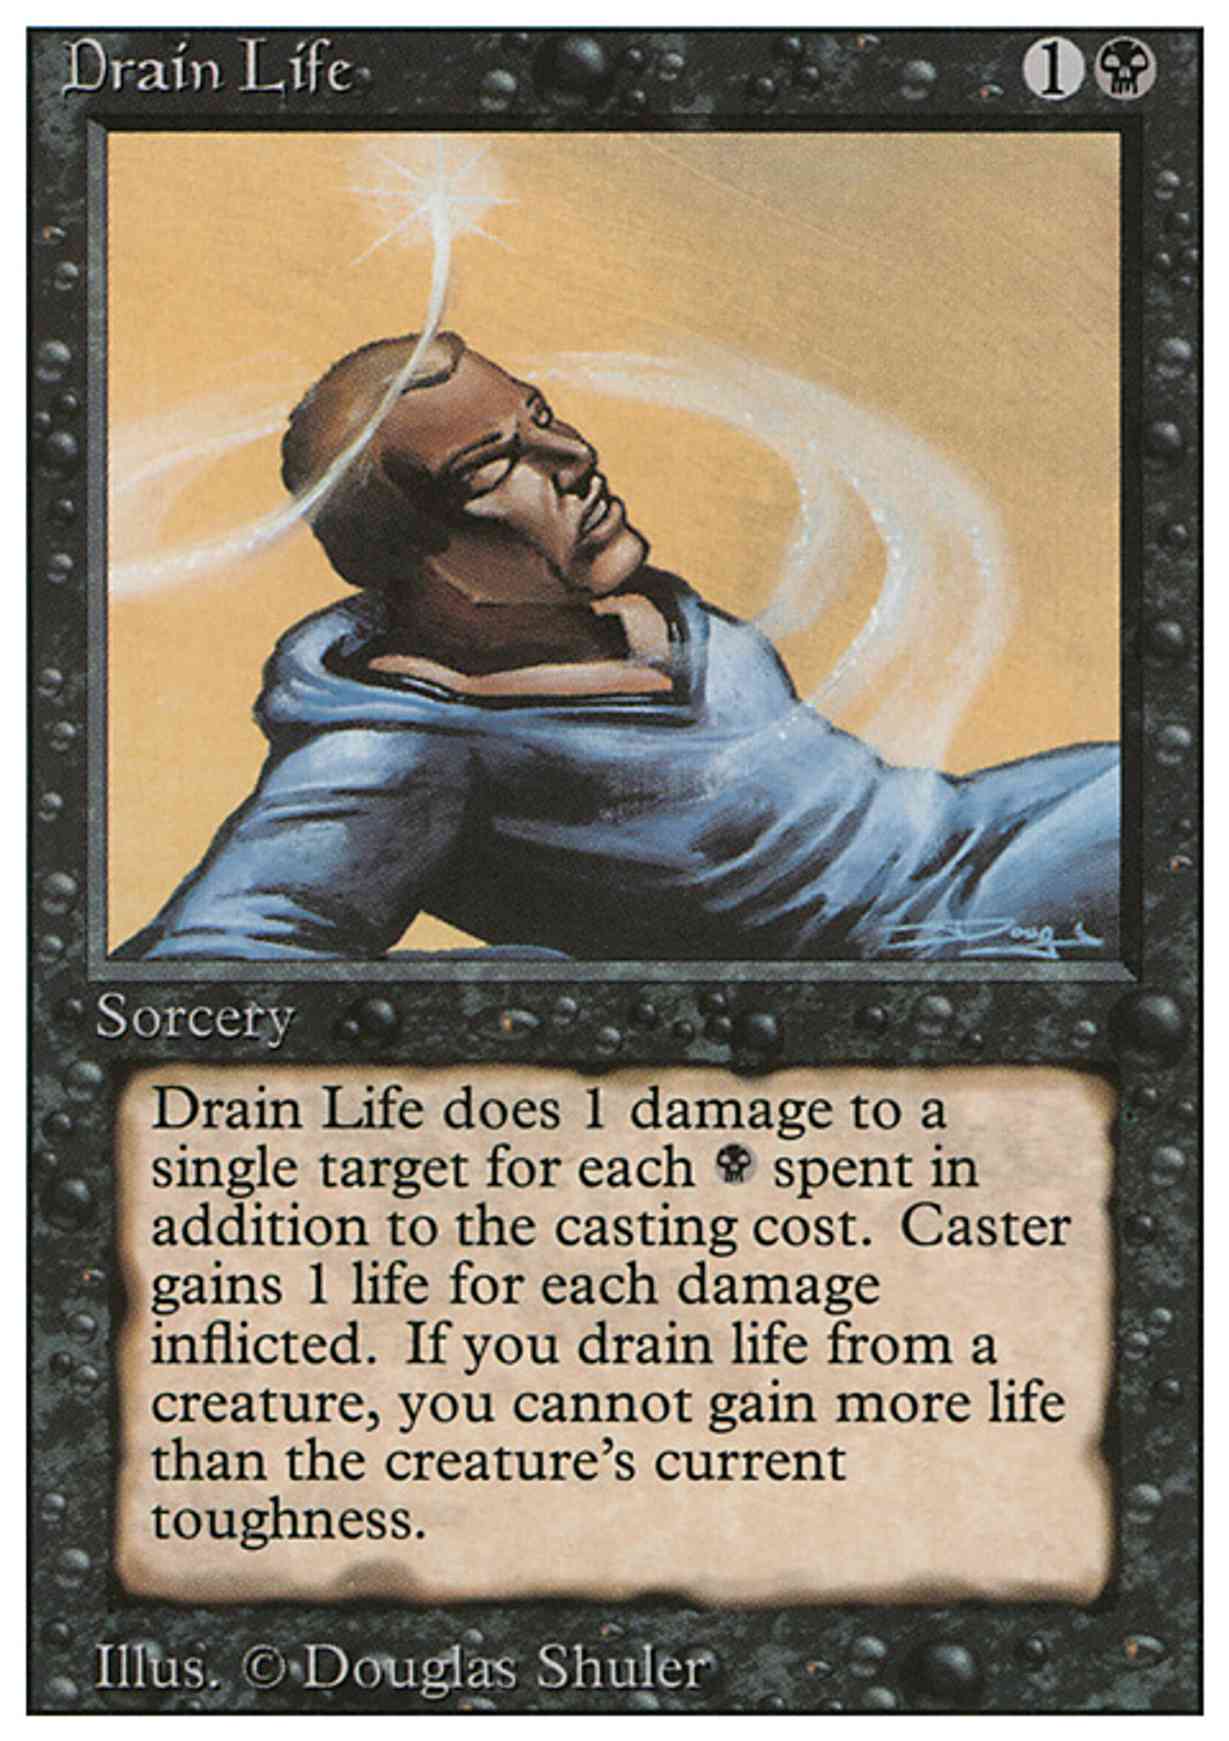 Drain Life magic card front